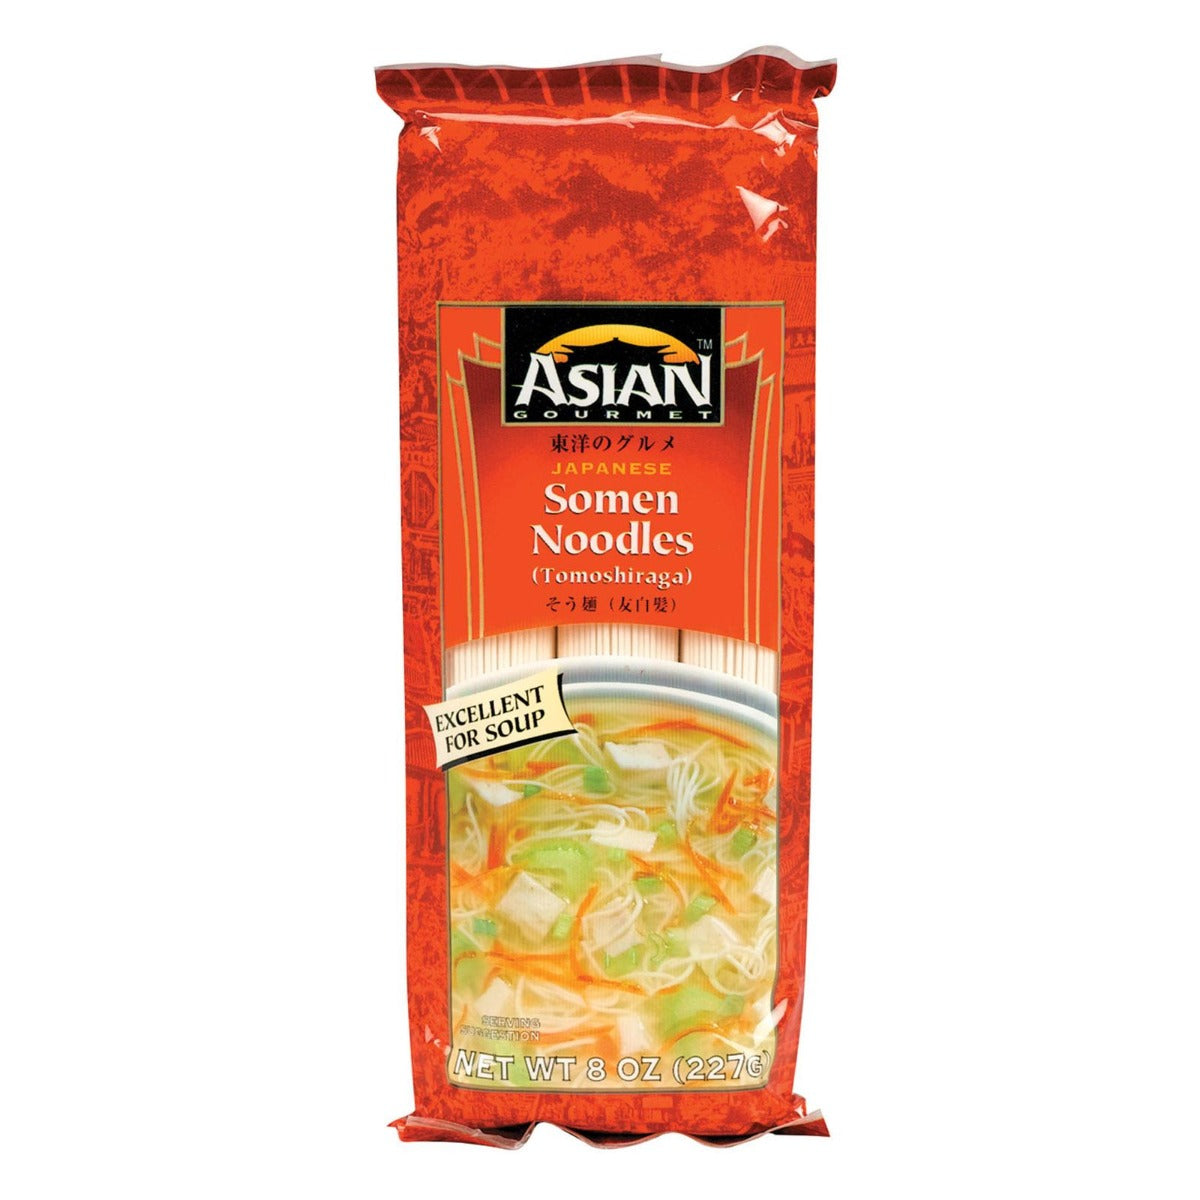 ASIAN GOURMET: Noodles Japanese Somen Tomoshiraga, 8 oz - Vending Business Solutions